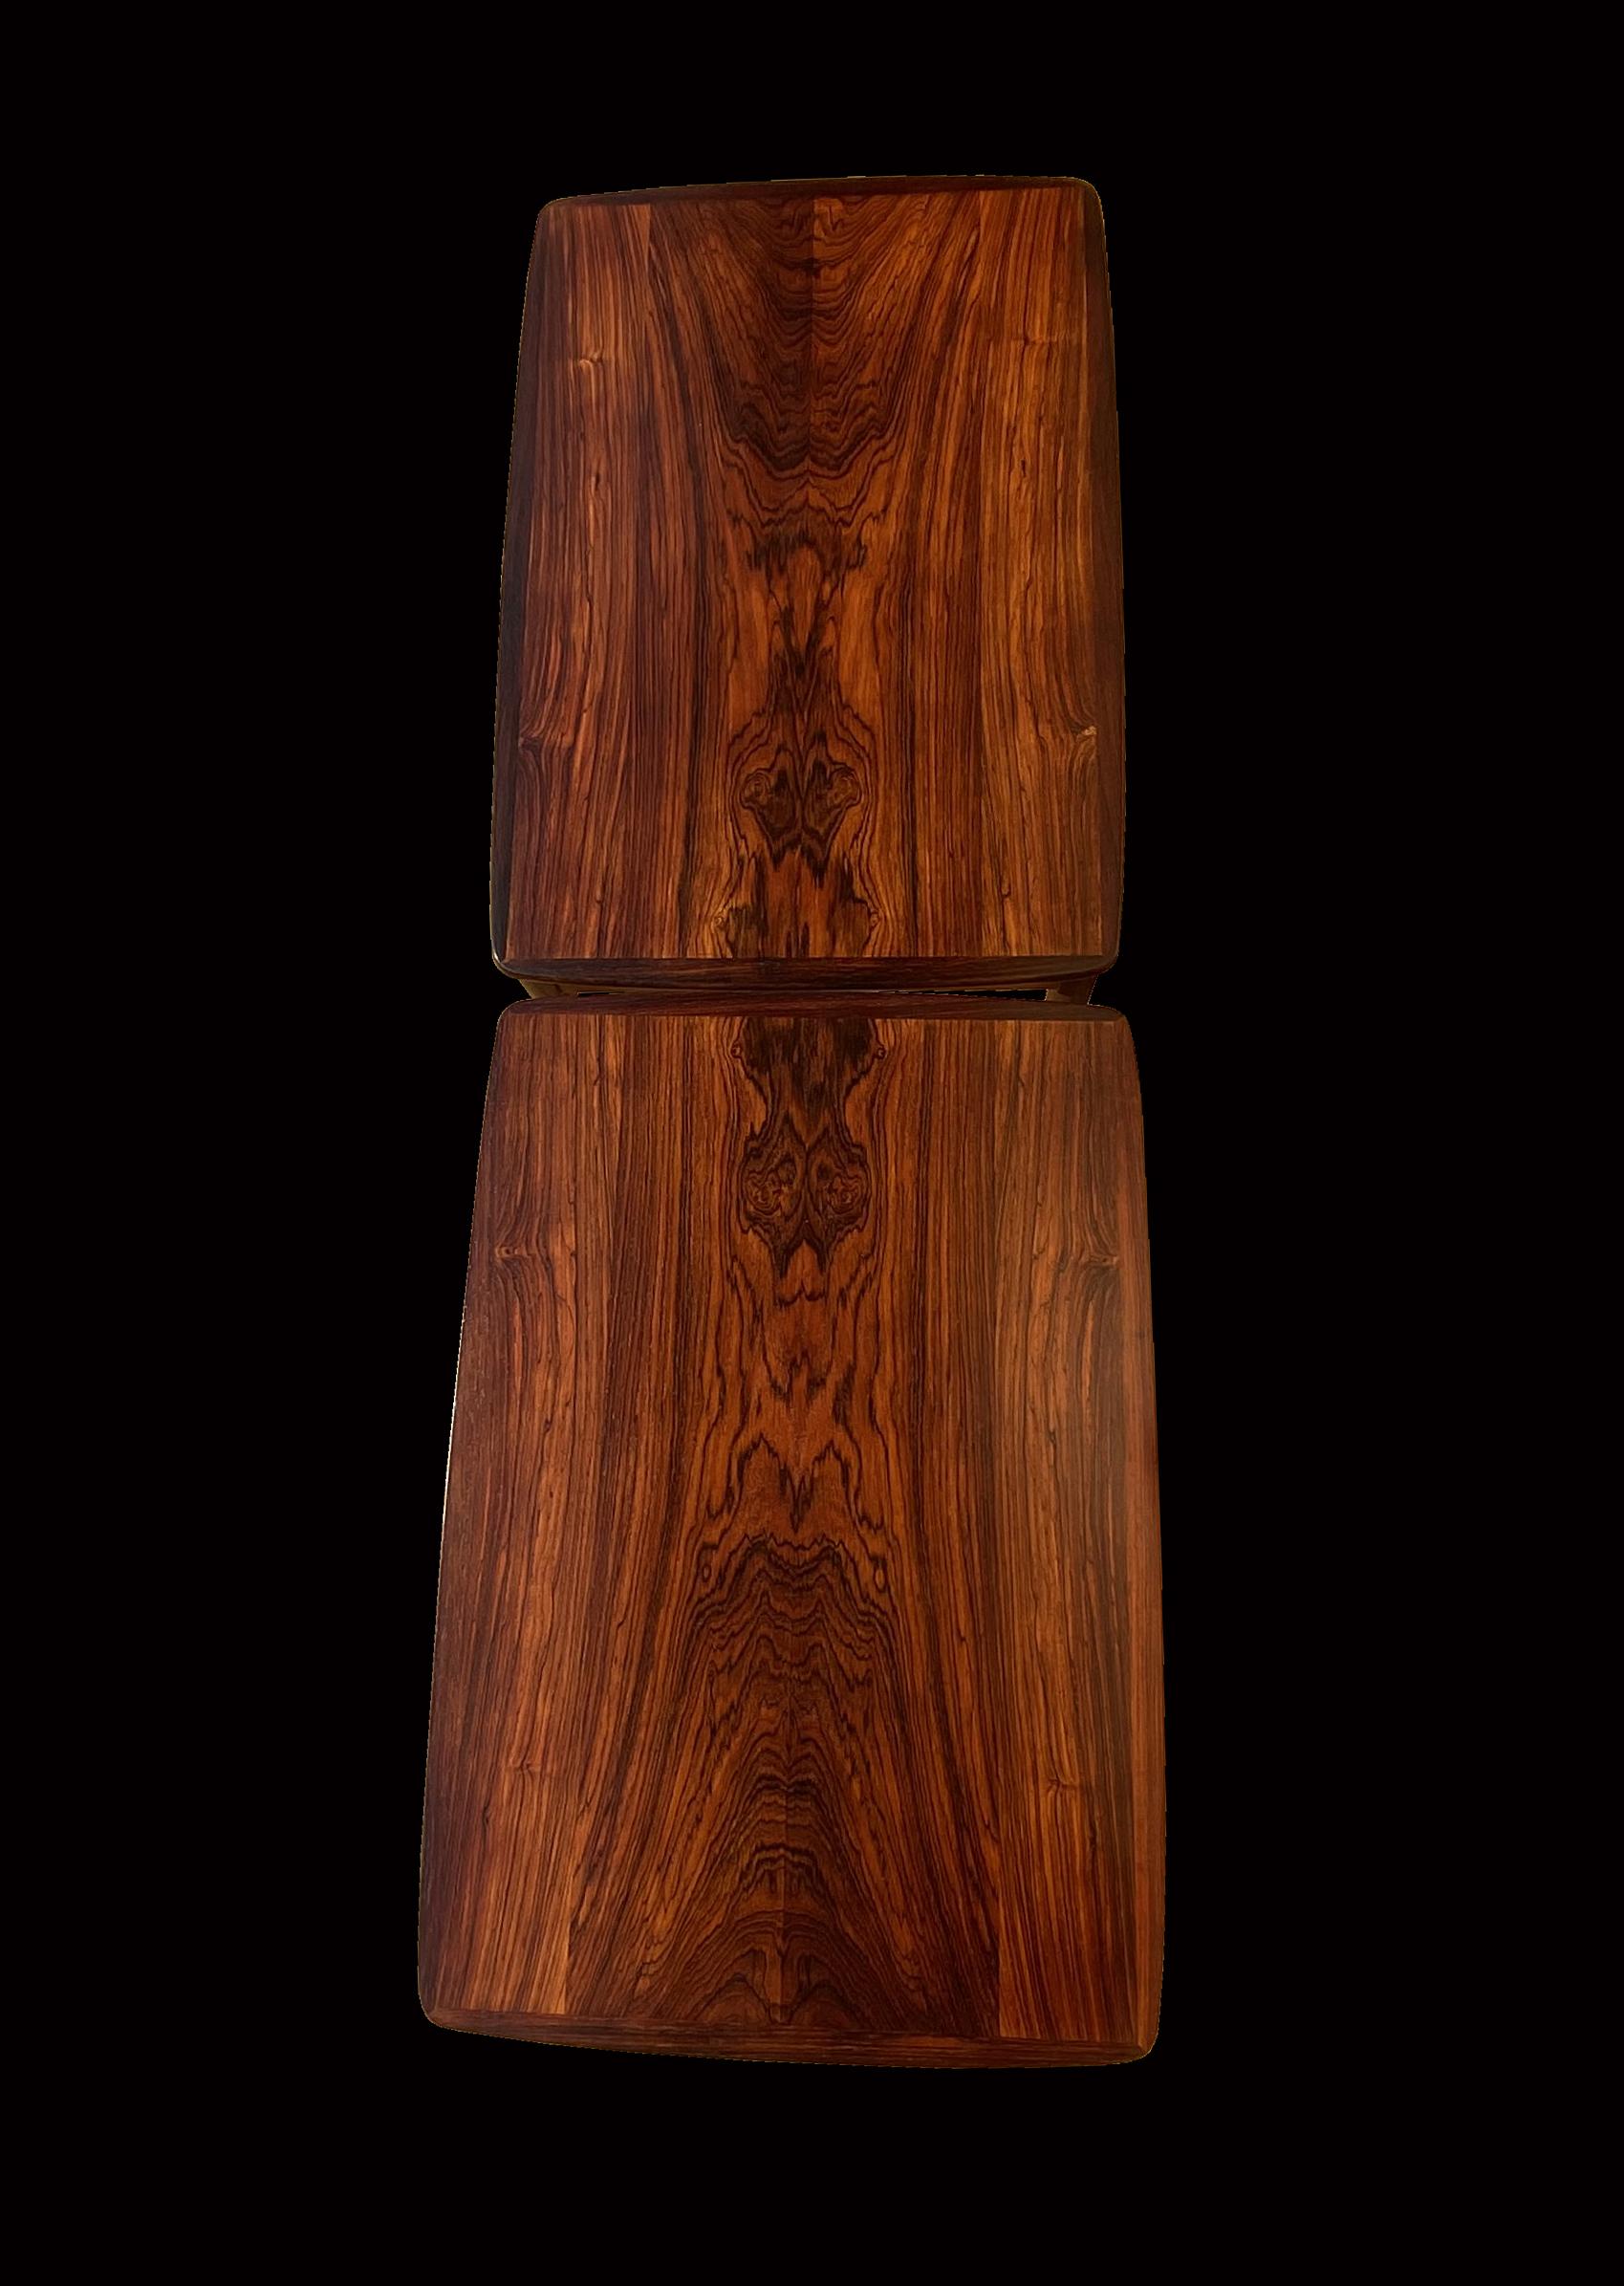 20th Century Pair of Santos Rosewood Tables by Yngve Sandstrom for Seffle Mobelfabrik